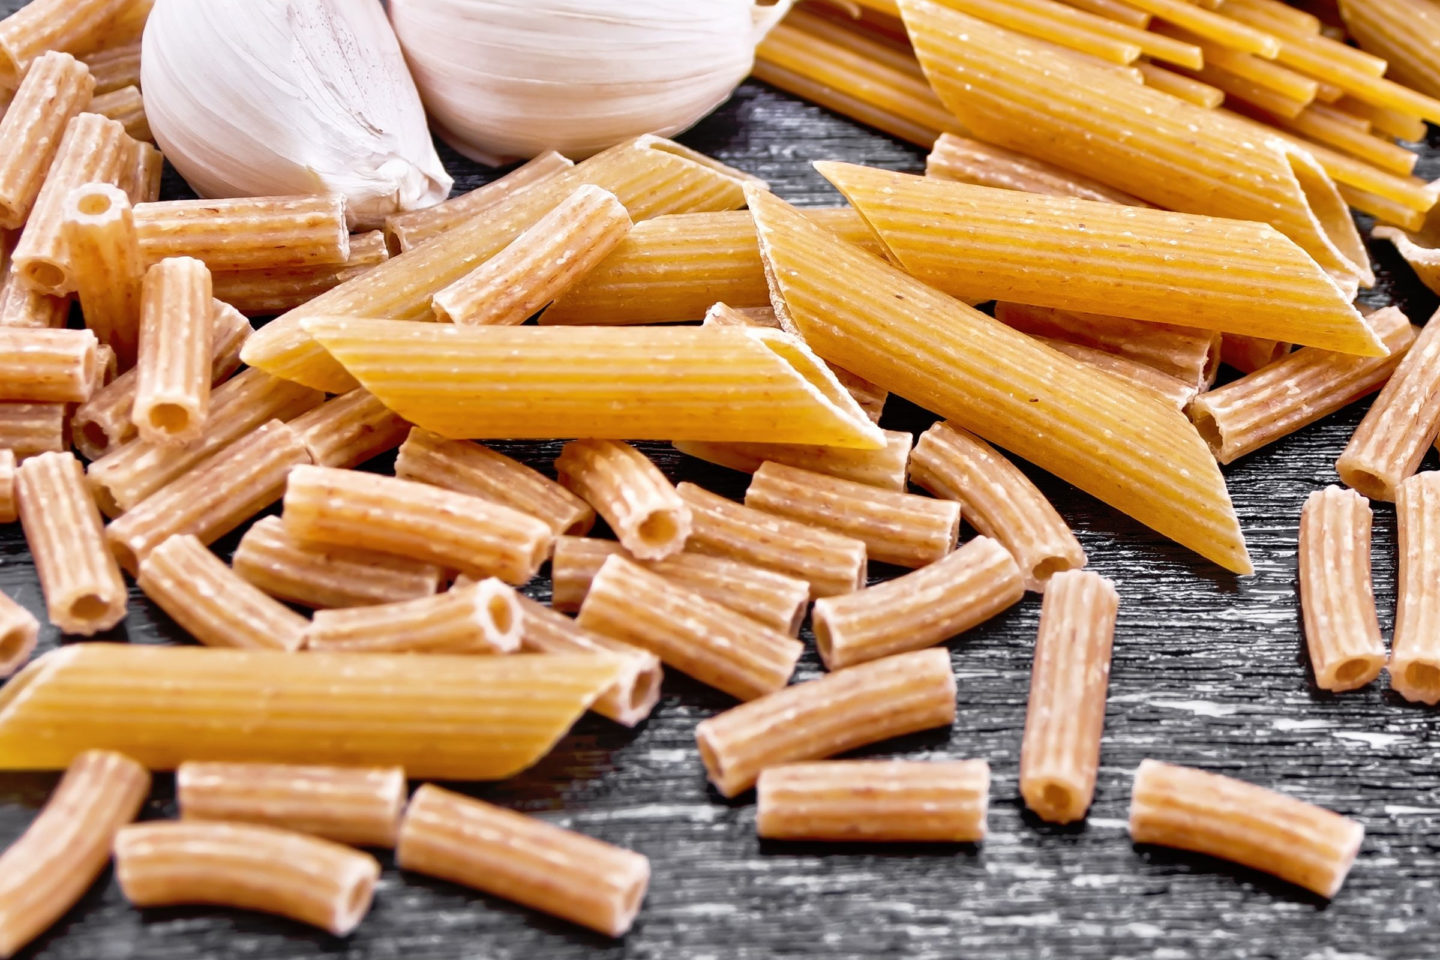 penne pasta has slanted tips while rigatoni has narrow tube like bodies